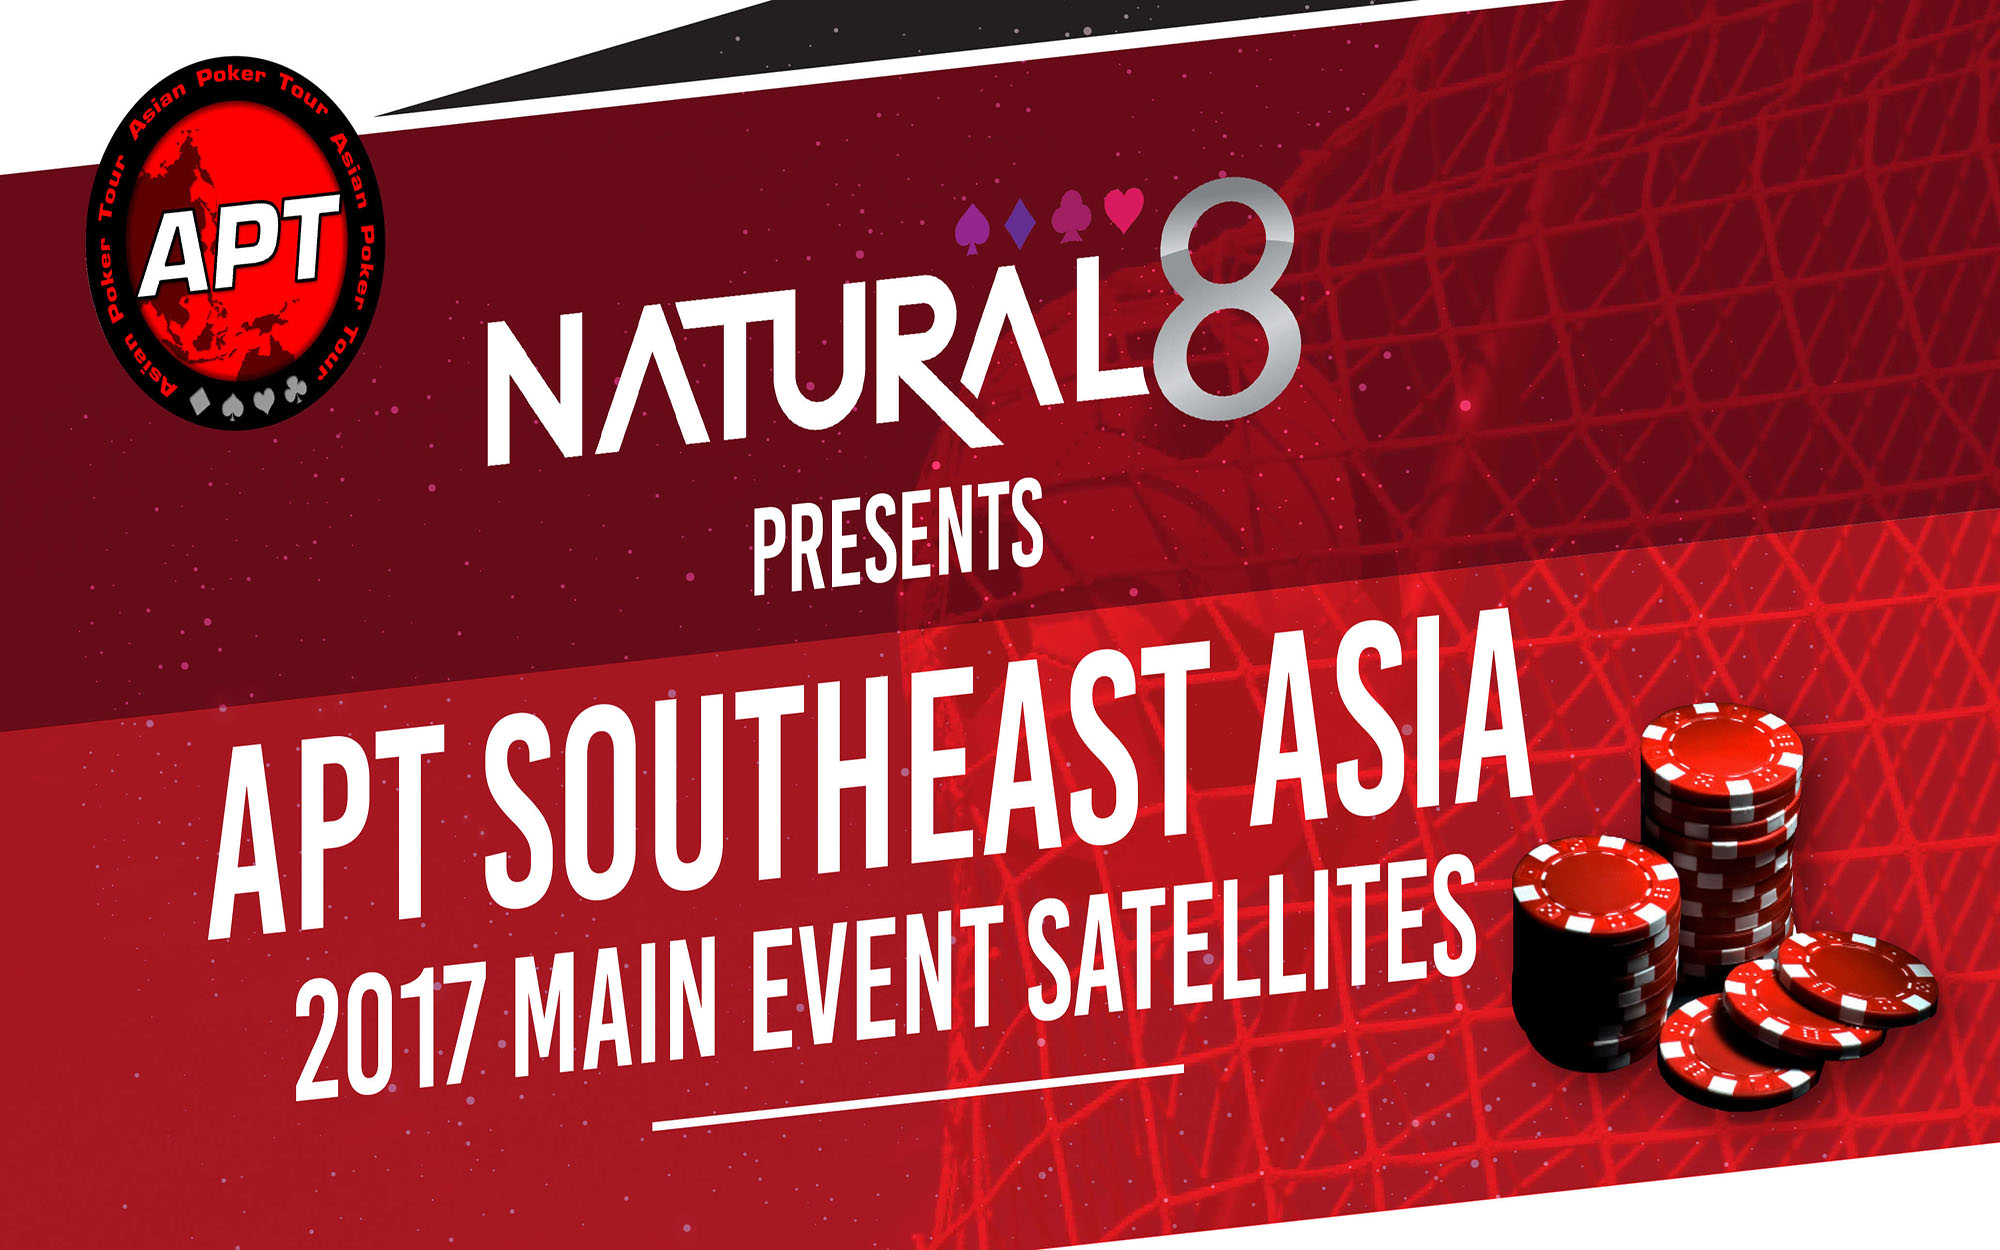 Satellites to the APT Southeast Asia 2017 Main Event!